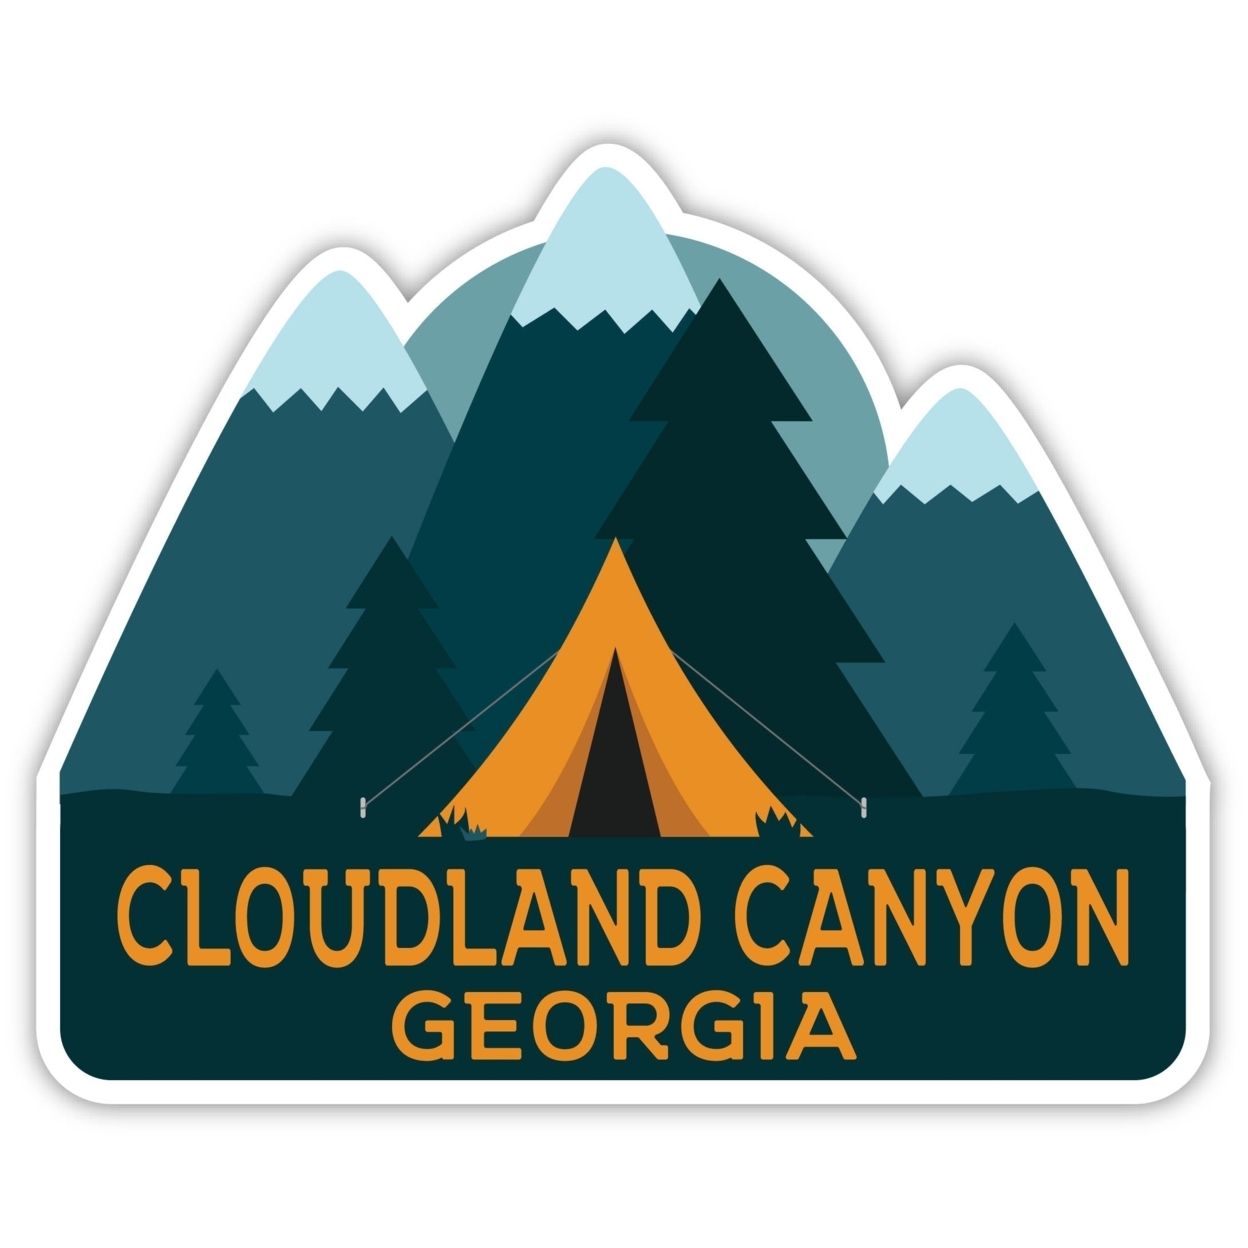 Cloudland Canyon Georgia Souvenir Decorative Stickers (Choose Theme And Size) - Single Unit, 4-Inch, Tent